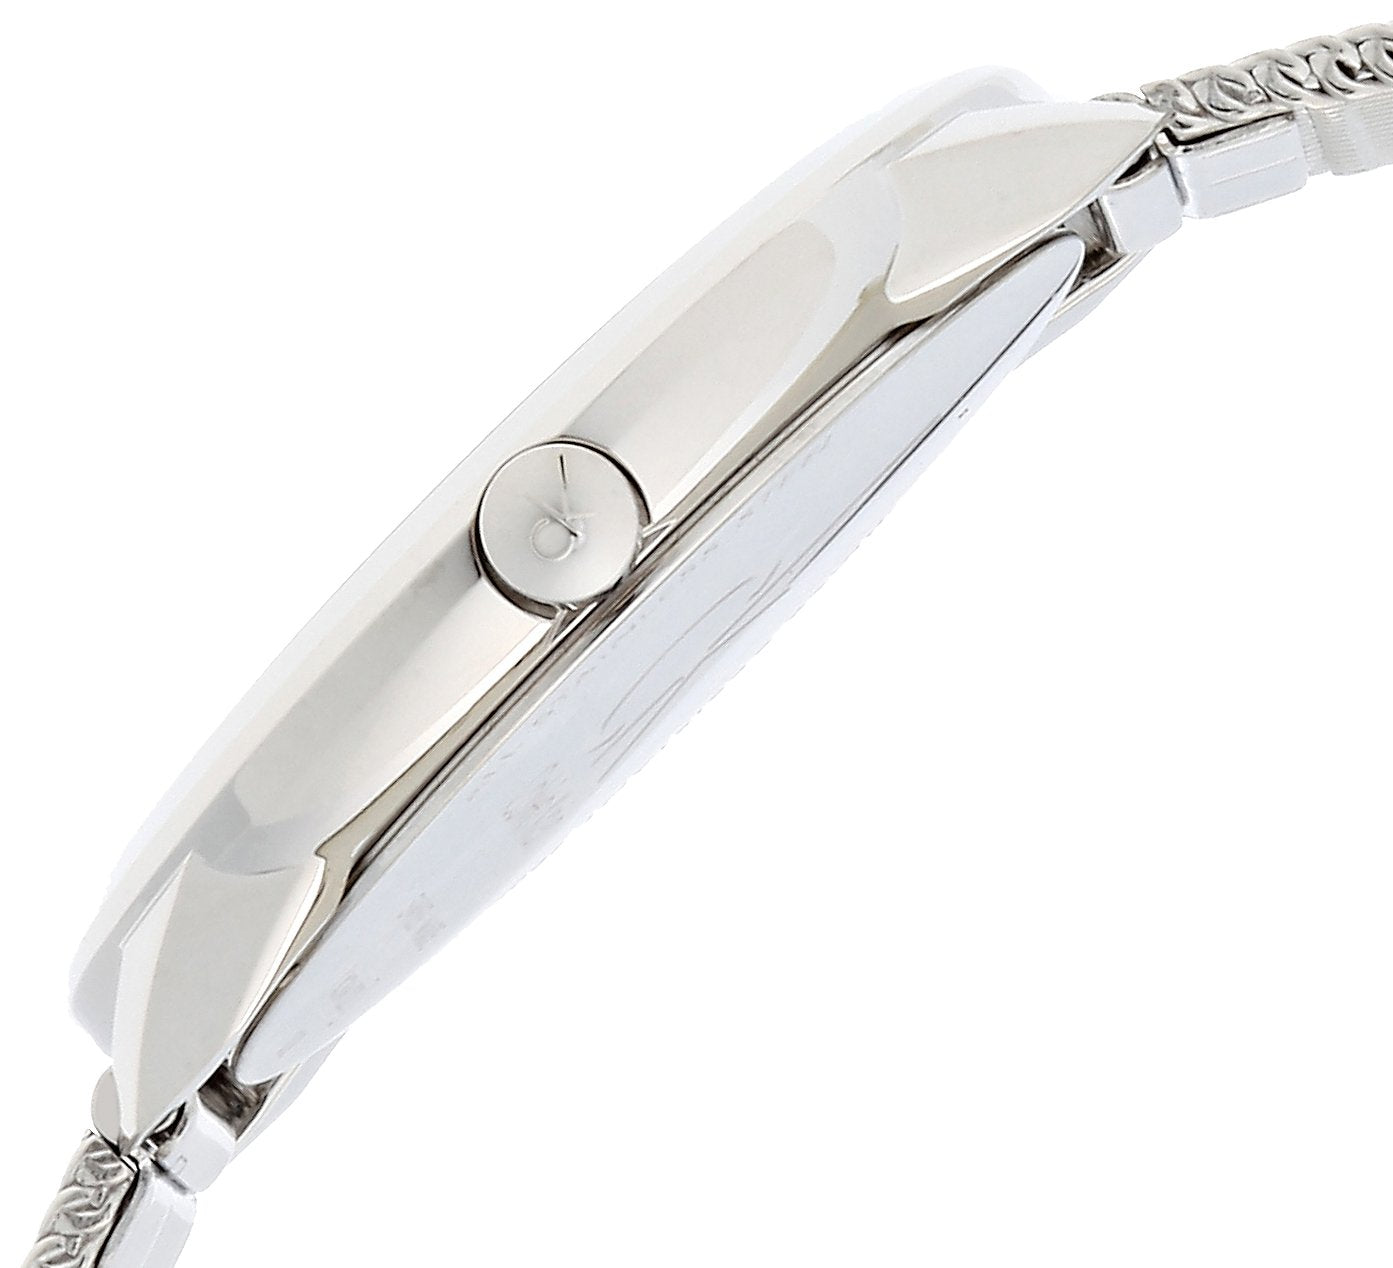 Calvin Klein Minimal Grey Dial Silver Mesh Bracelet Watch for Men - K3M22124